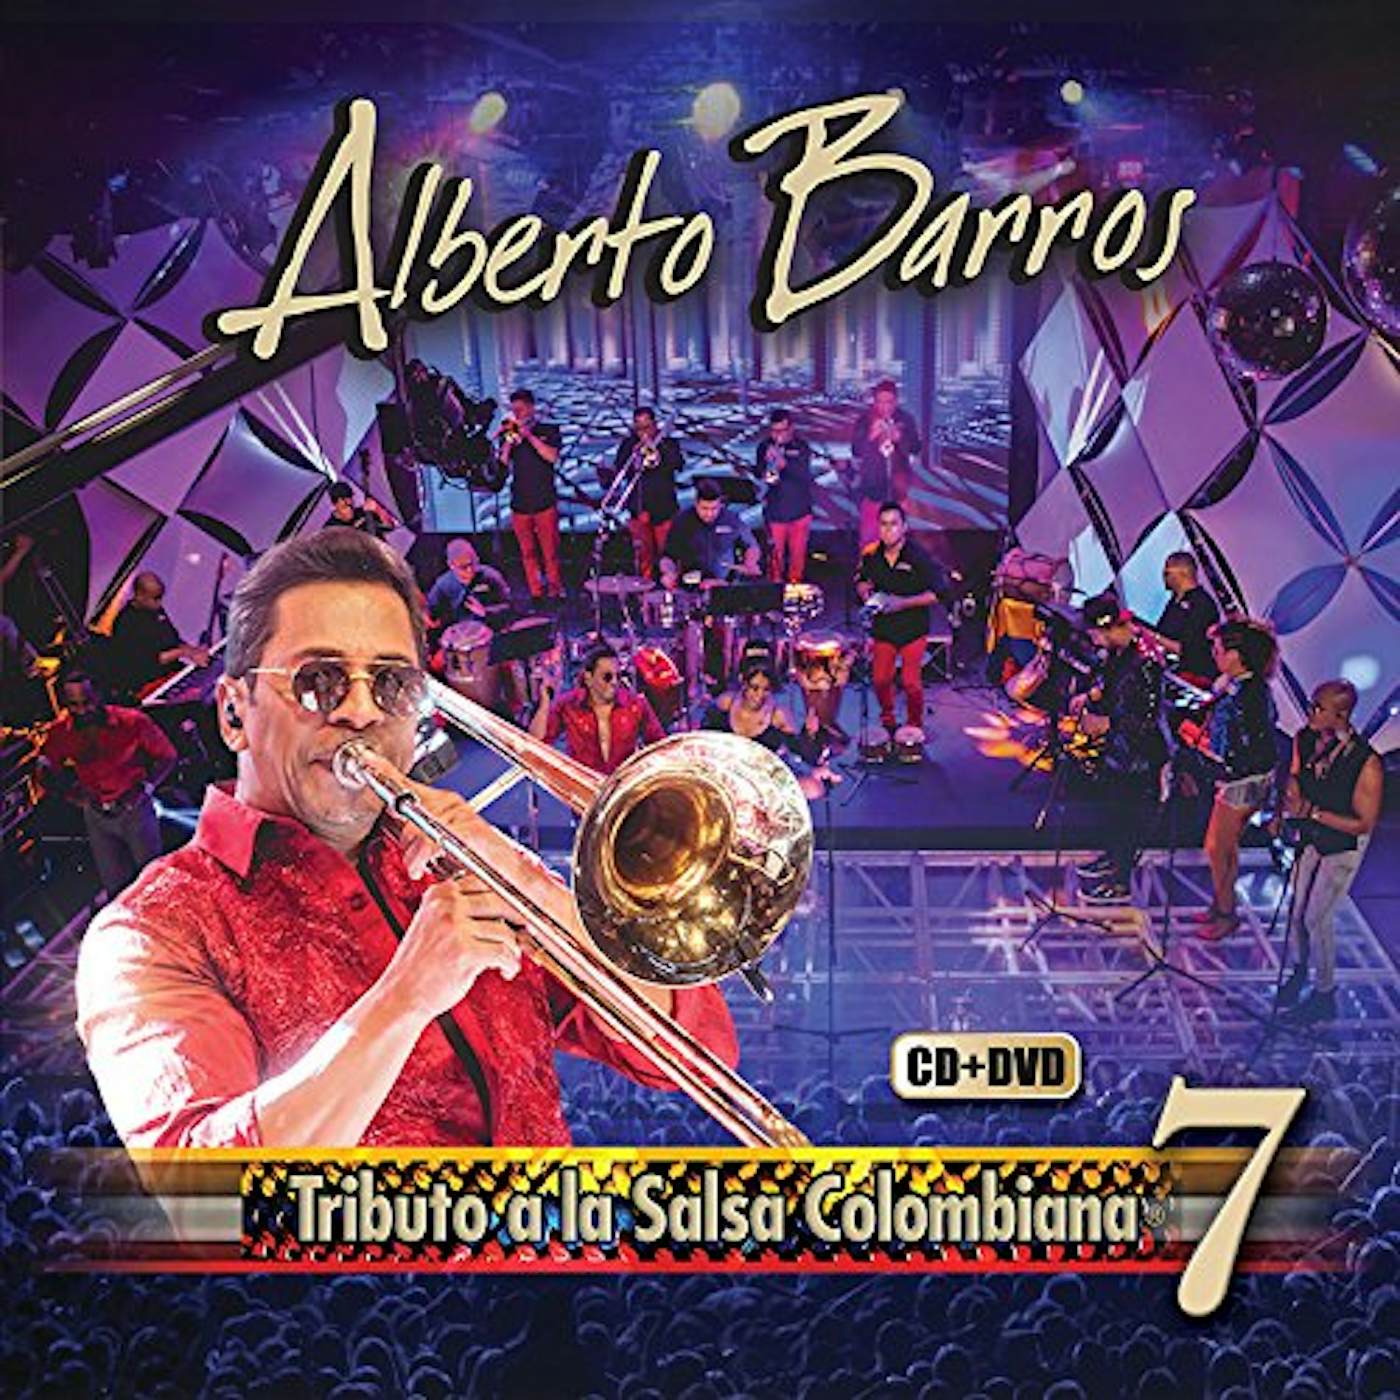 Alberto Barros TRIBUTO A LA SALSA COLOMBIANA VOL 7 CD